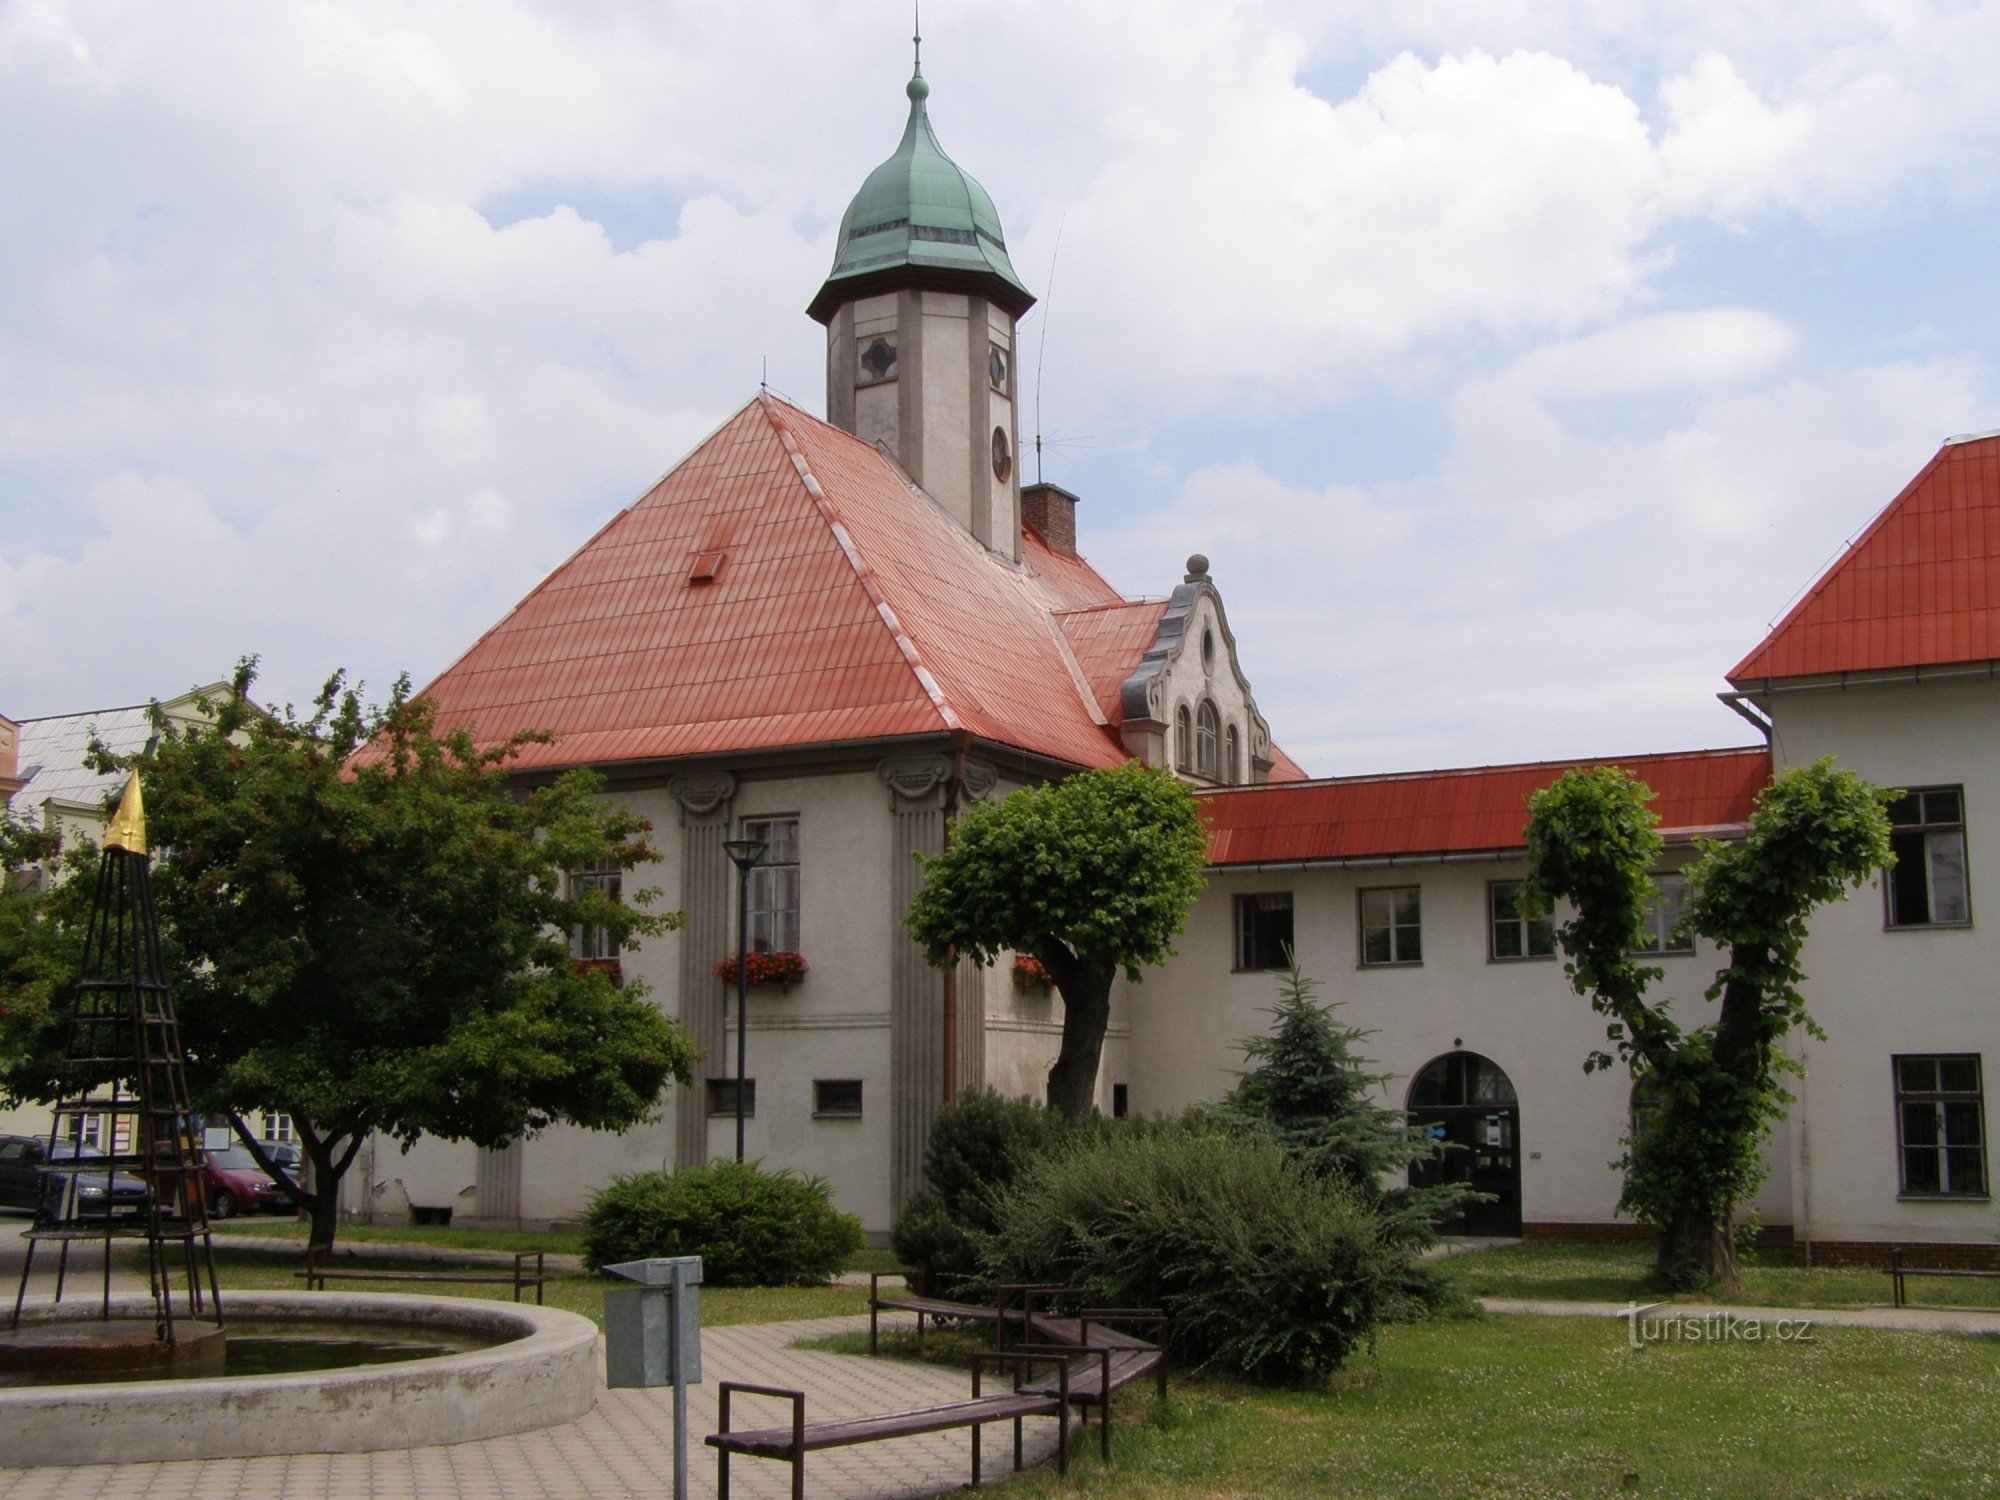 Javorník - town hall